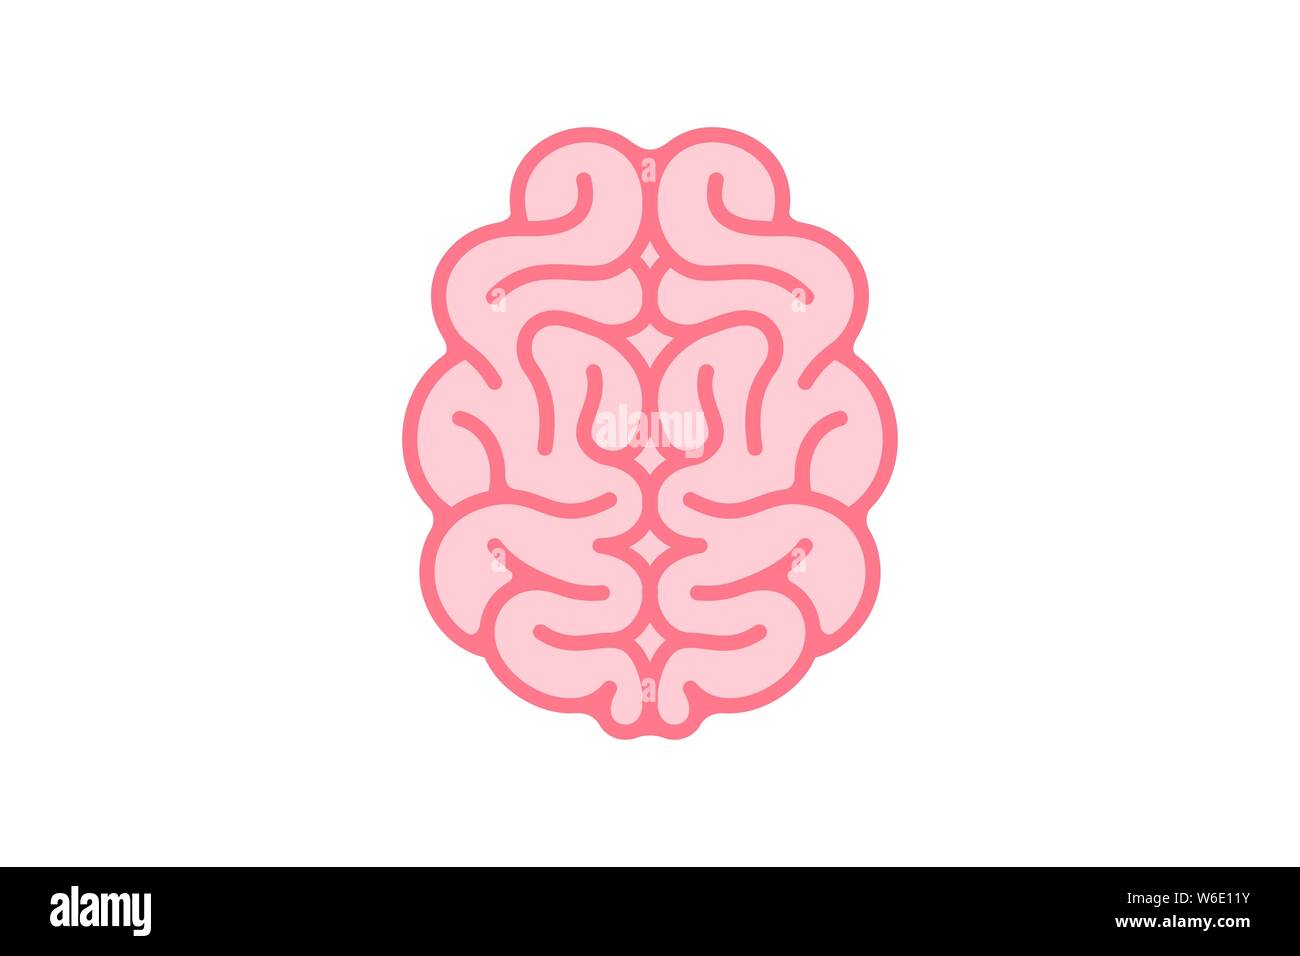 Brain intelligence mind sign. Central nervous system organ black icon